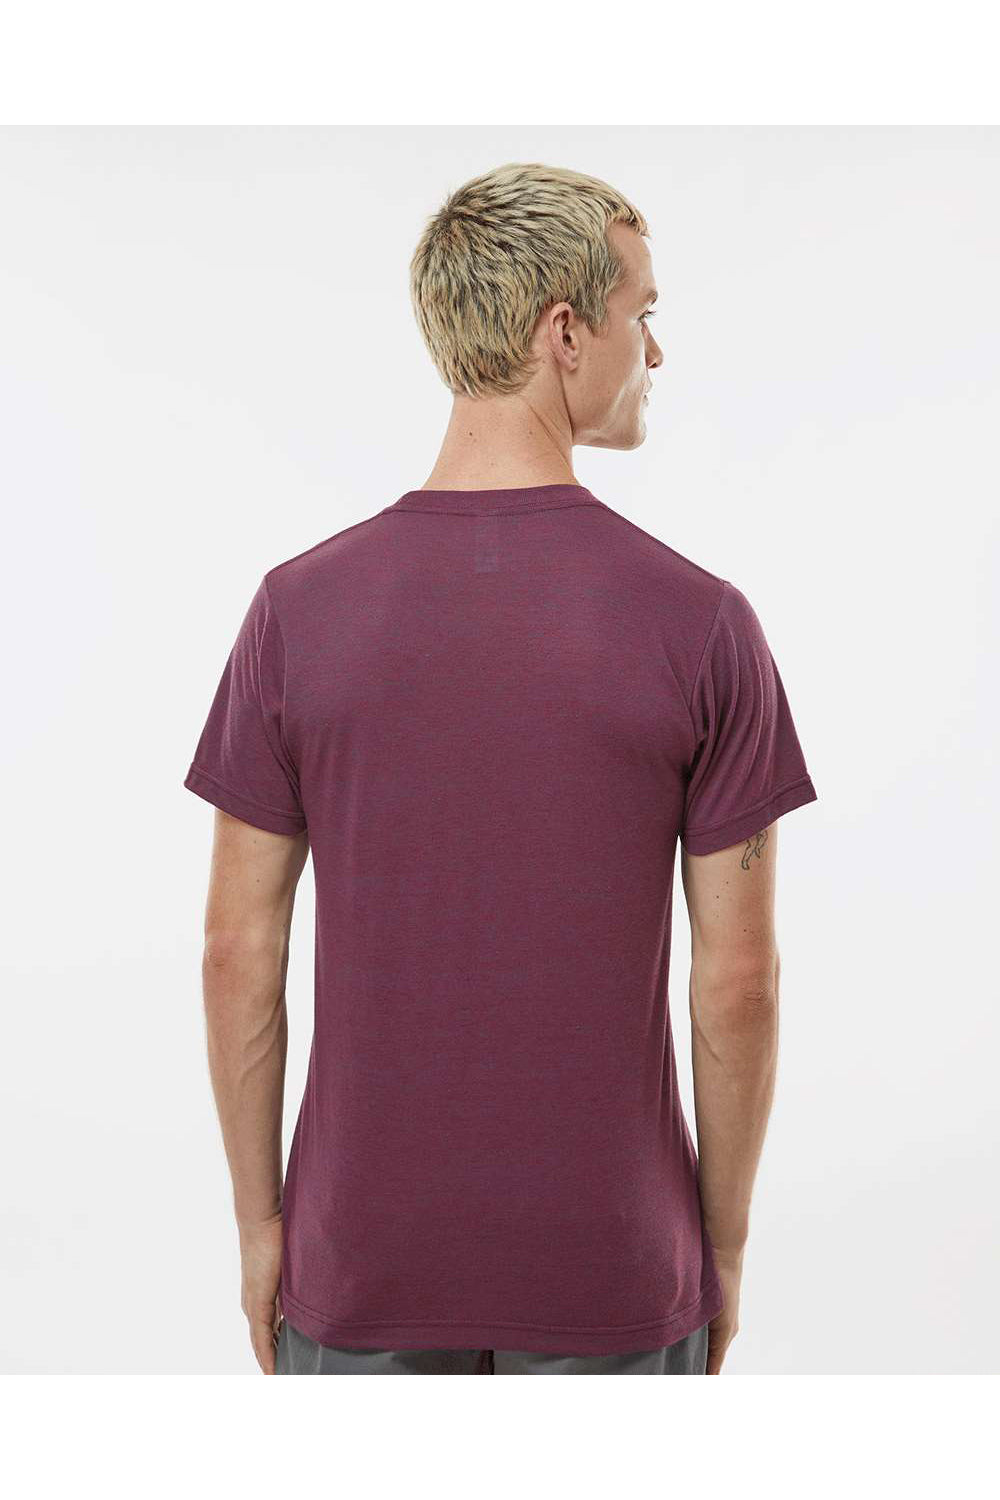 Tultex 254 Mens Short Sleeve Crewneck T-Shirt Berry Purple Model Back